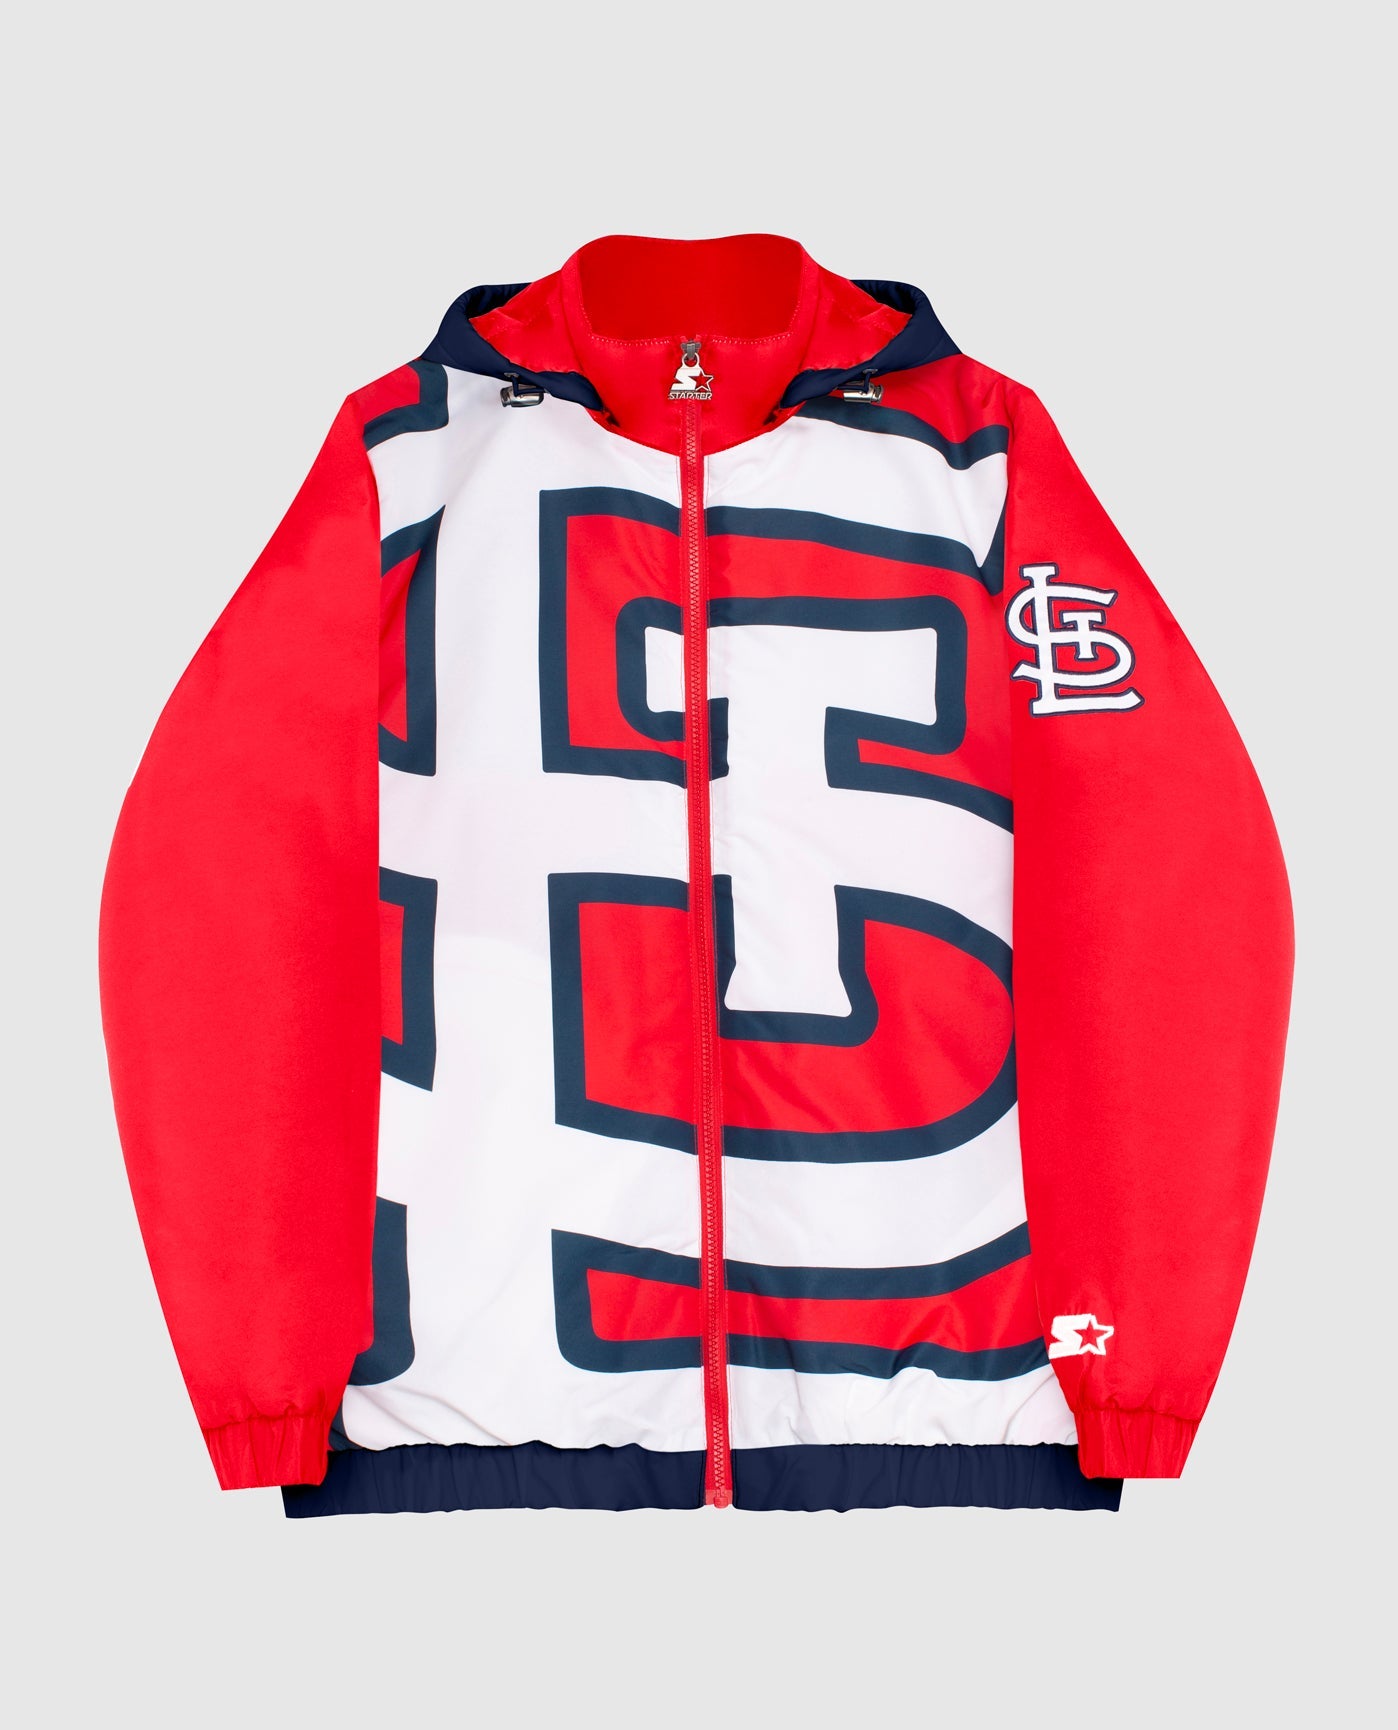 Starter Navy St. Louis Cardinals The Legend Full-Snap Jacket